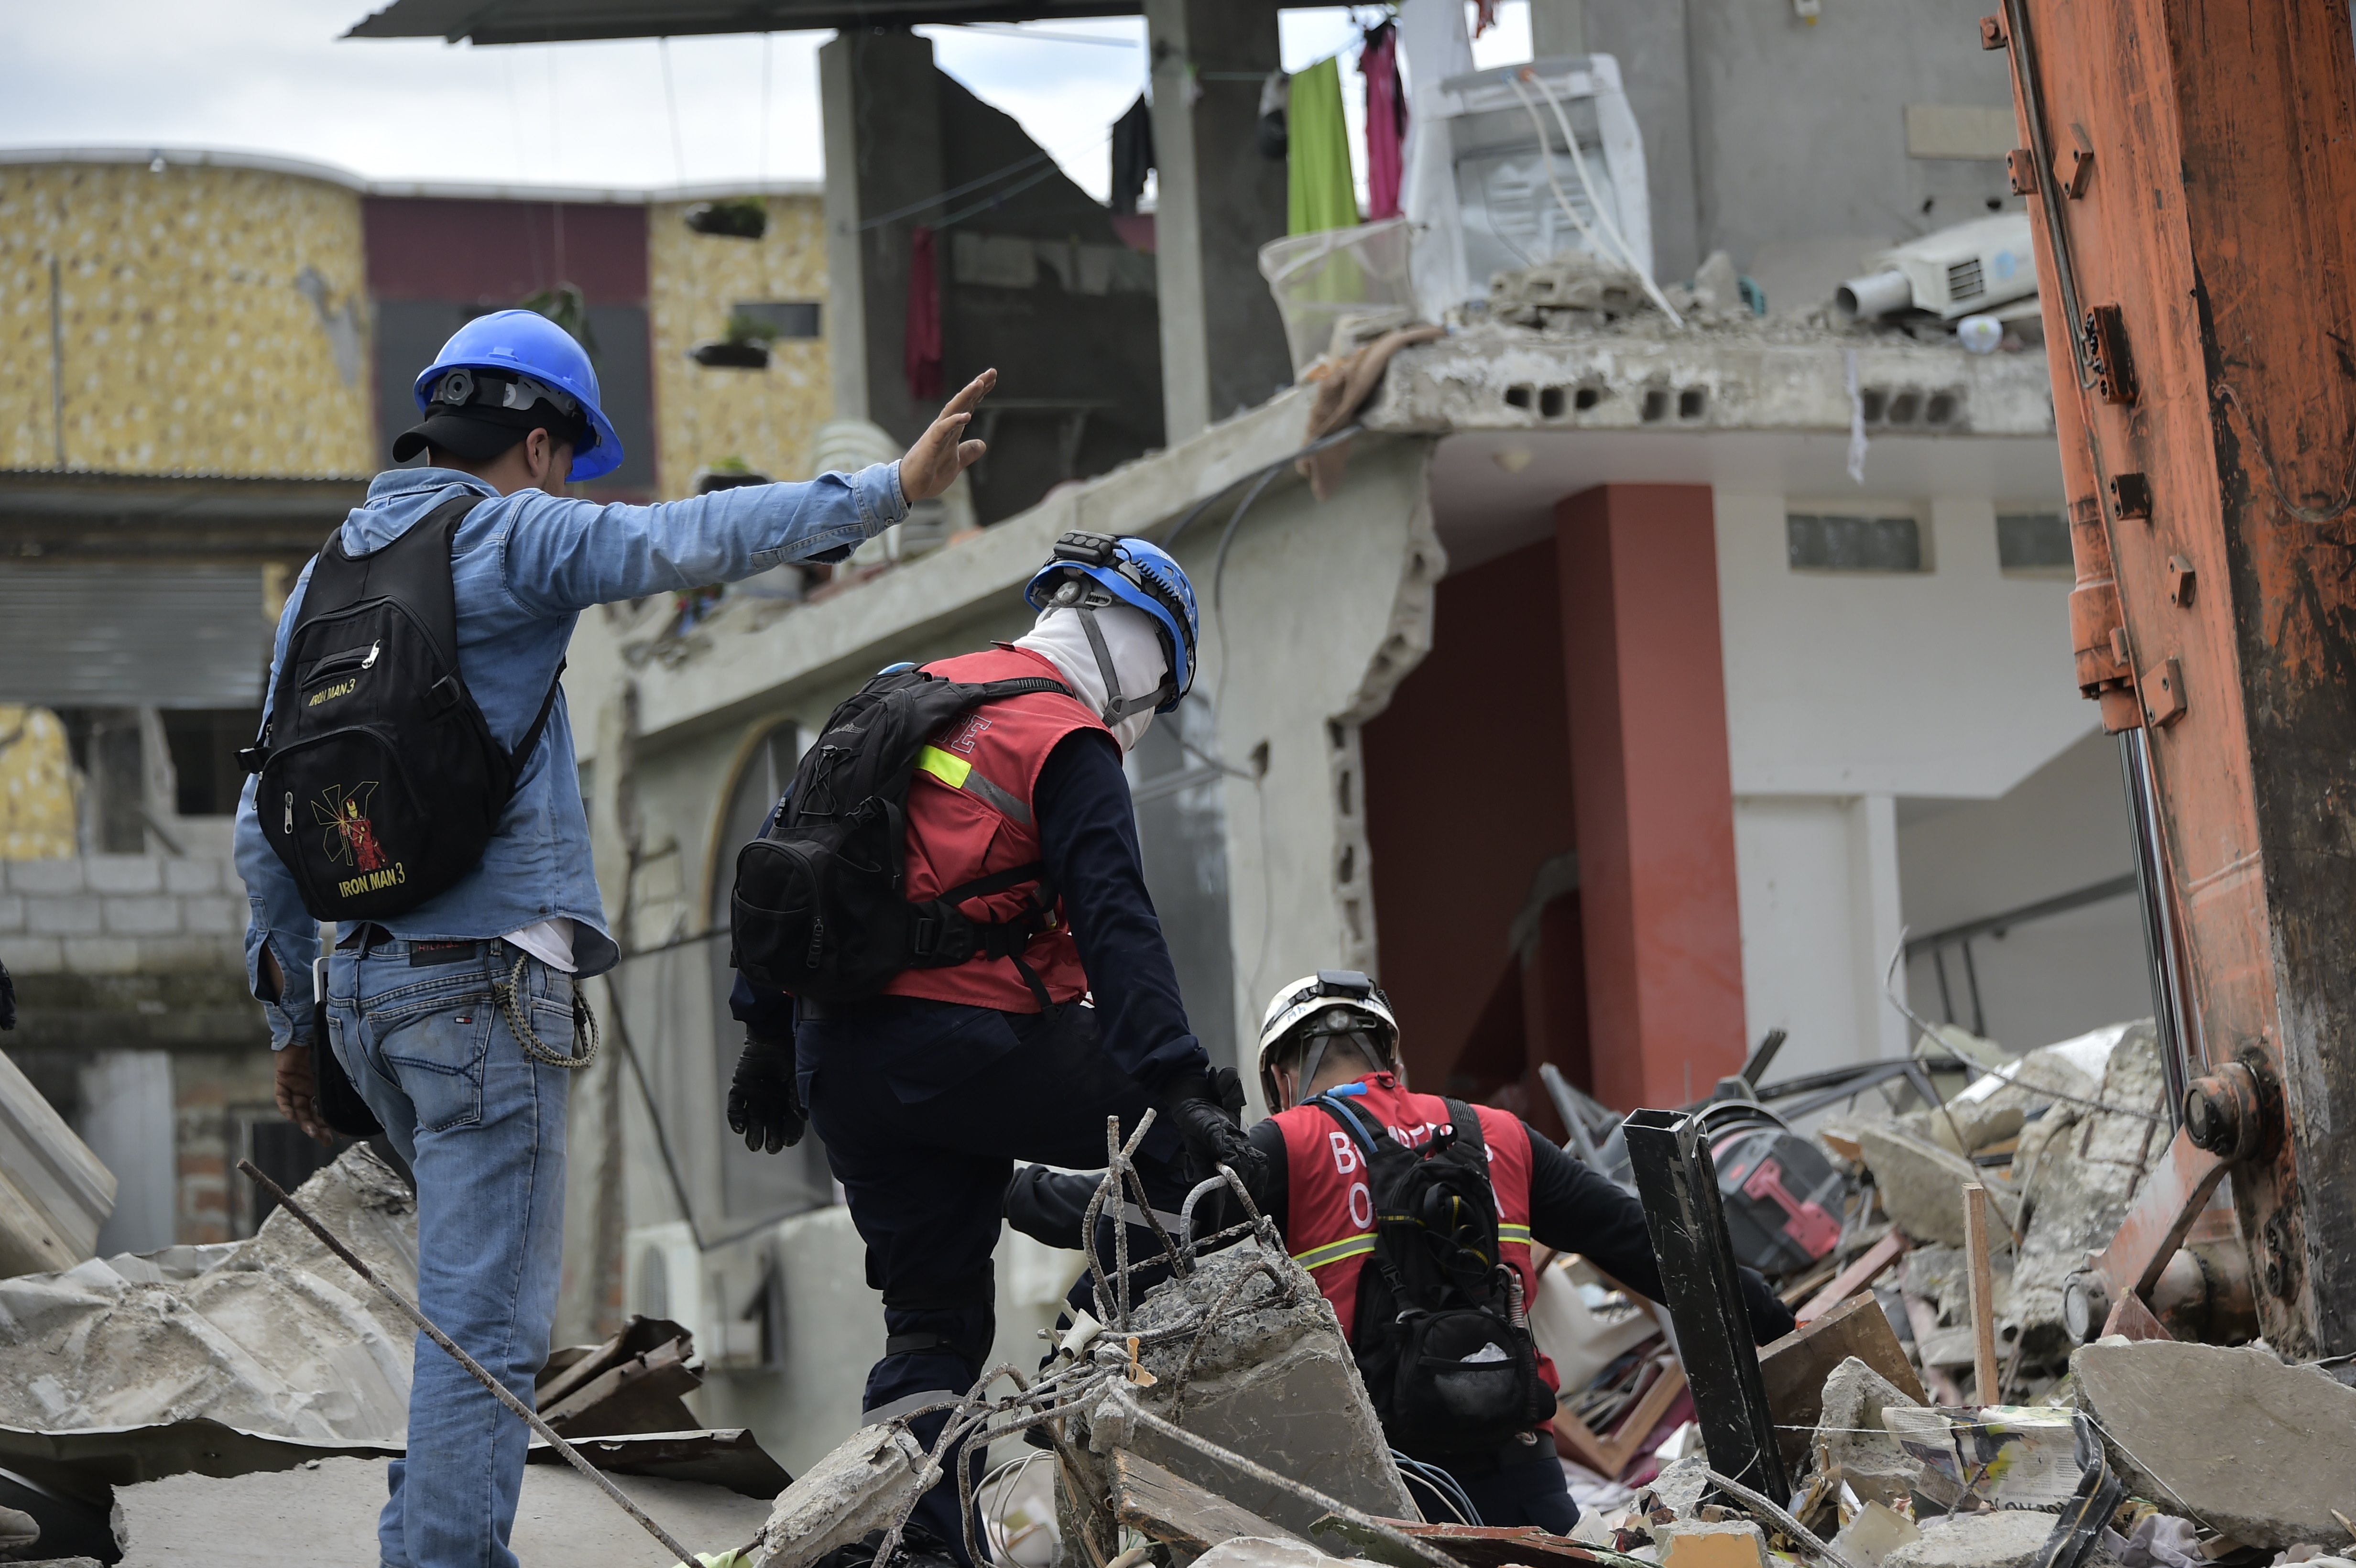 Sismo en Ecuador: balance oficial sube a 246 muertos y 2.527 heridos